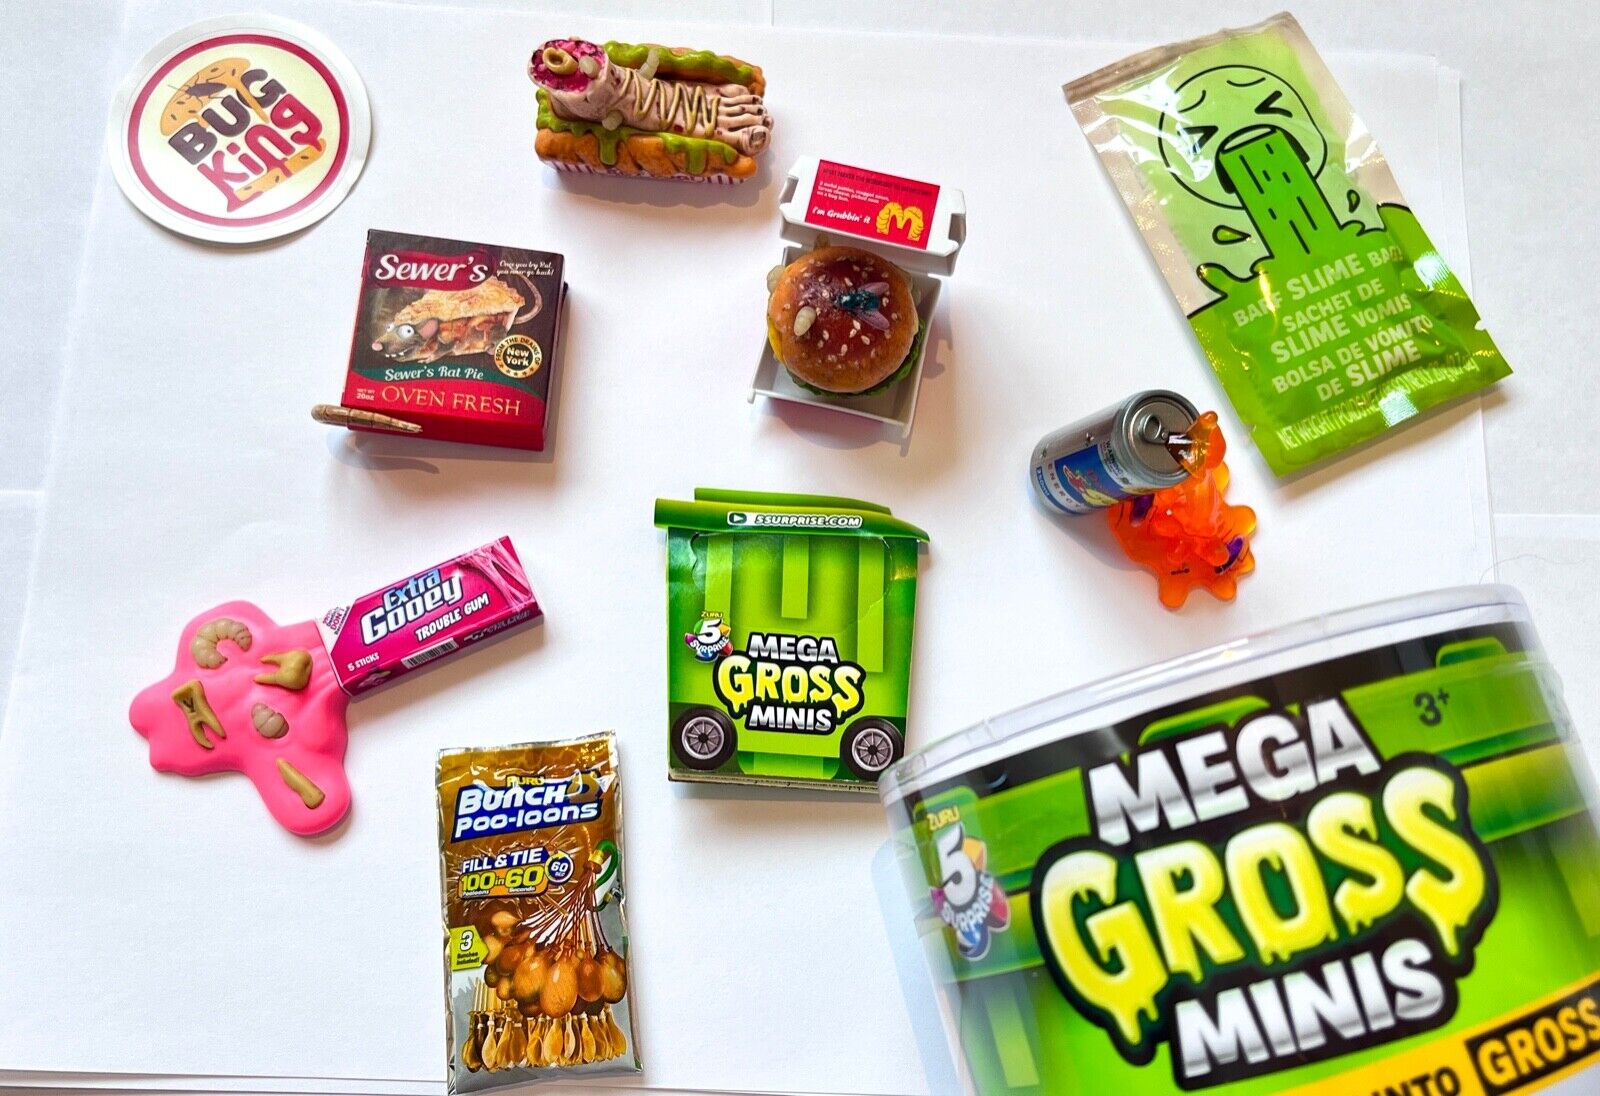 Zuru Mega Gross Minis Mini Brands Pick Your Toy Combine Shipping NEW RELEASE